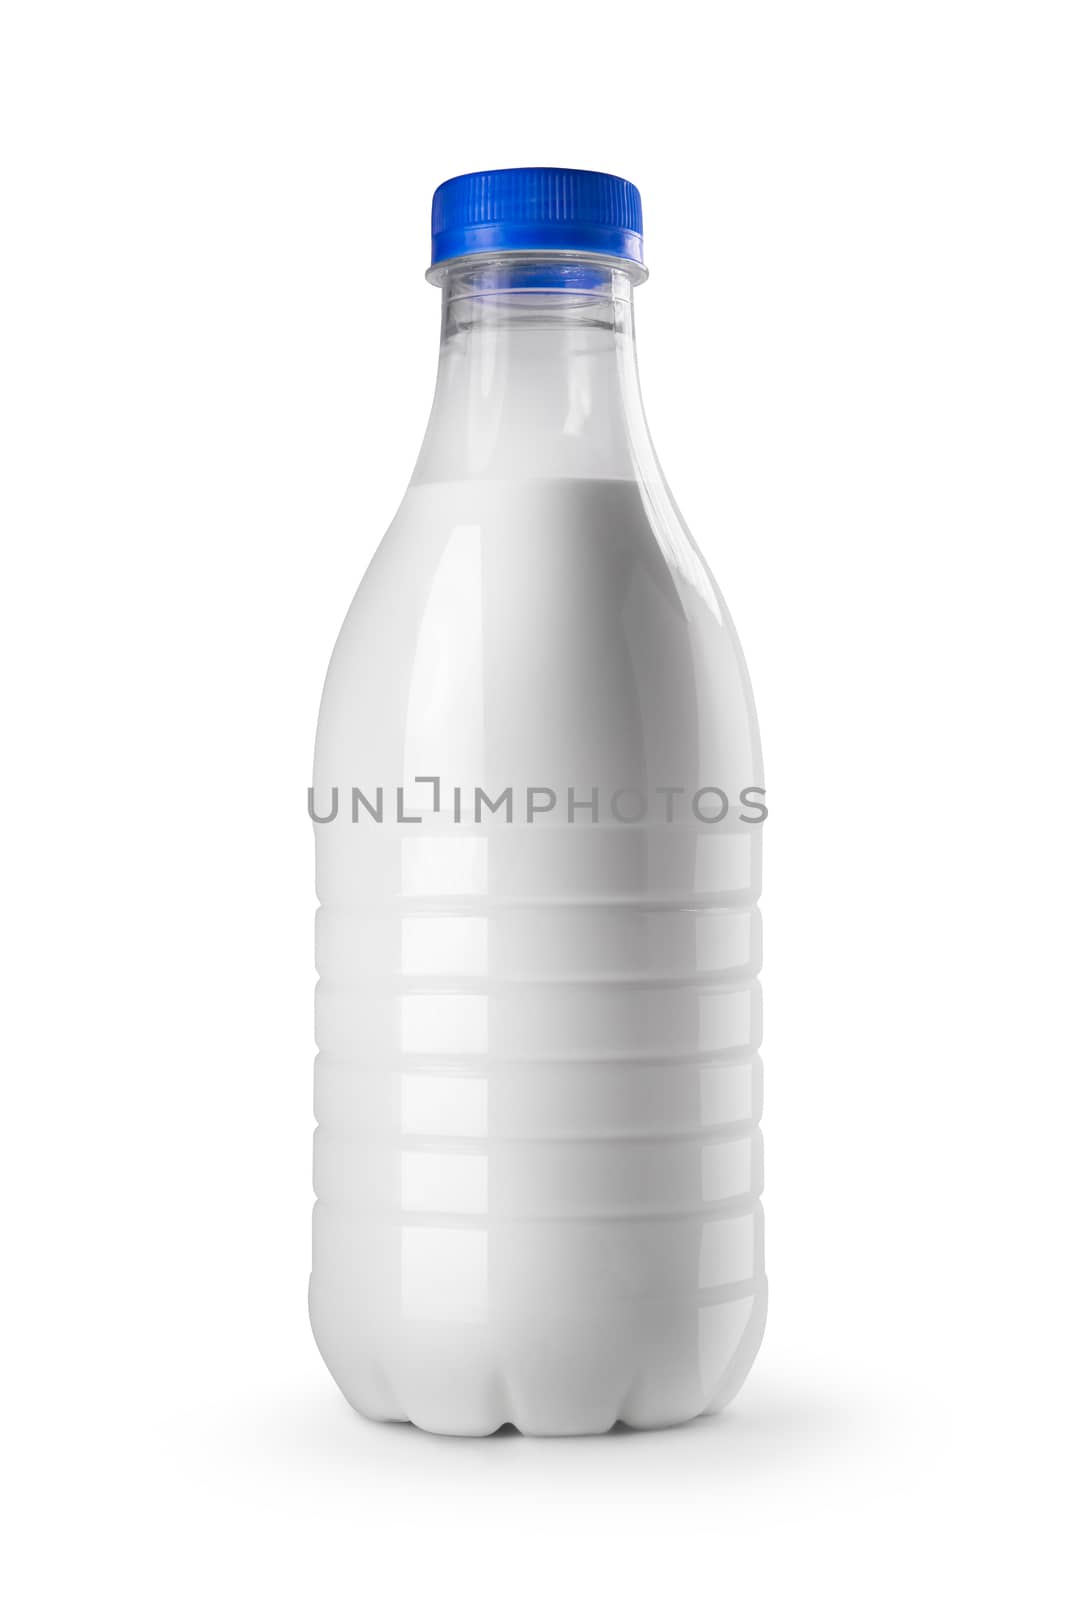 Milk bottle isolated on white background. Clean design